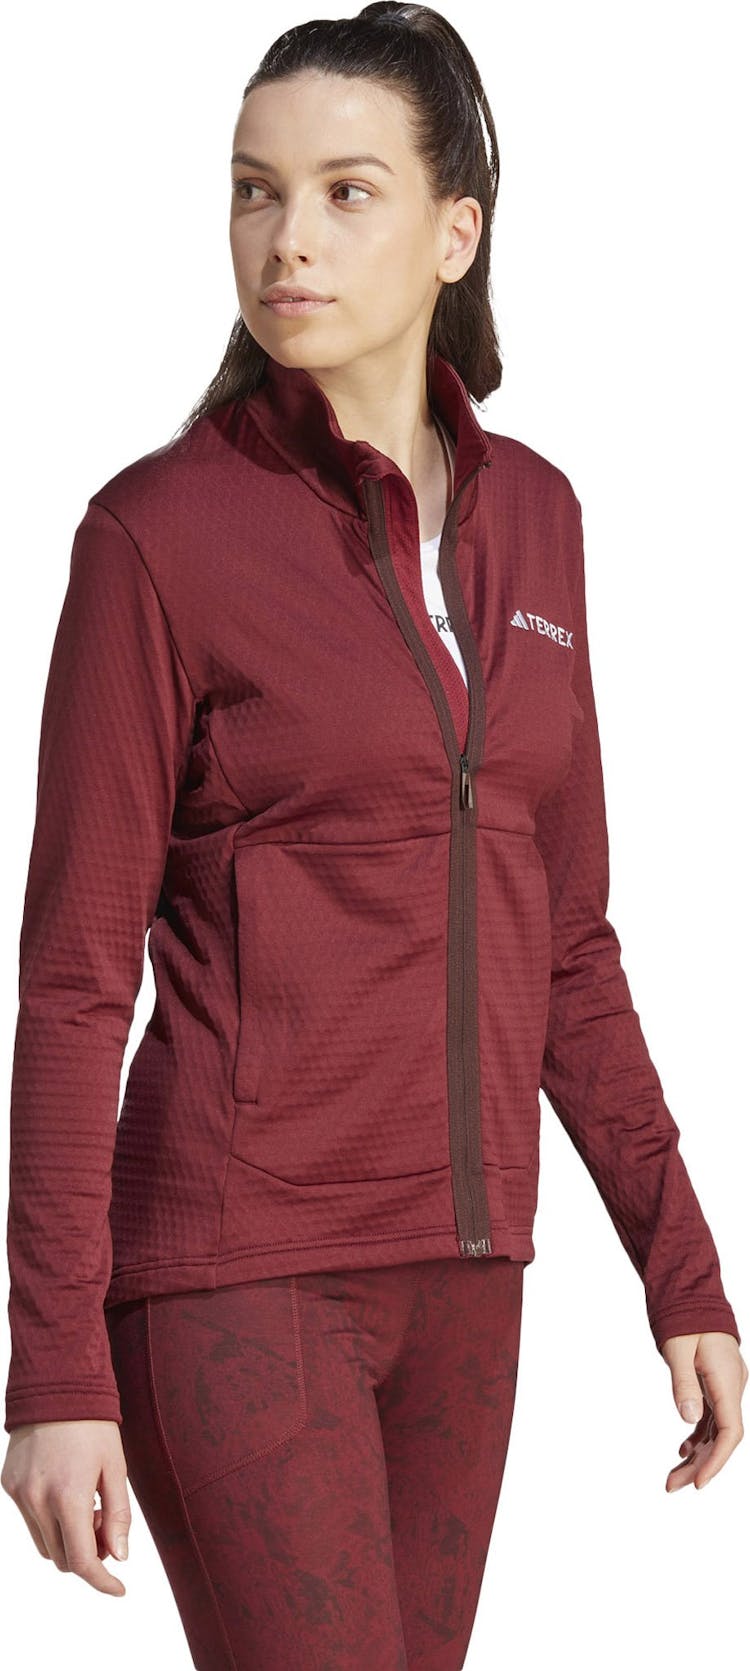 Product gallery image number 4 for product Terrex Multi Light Fleece Full-Zip Jacket - Women's